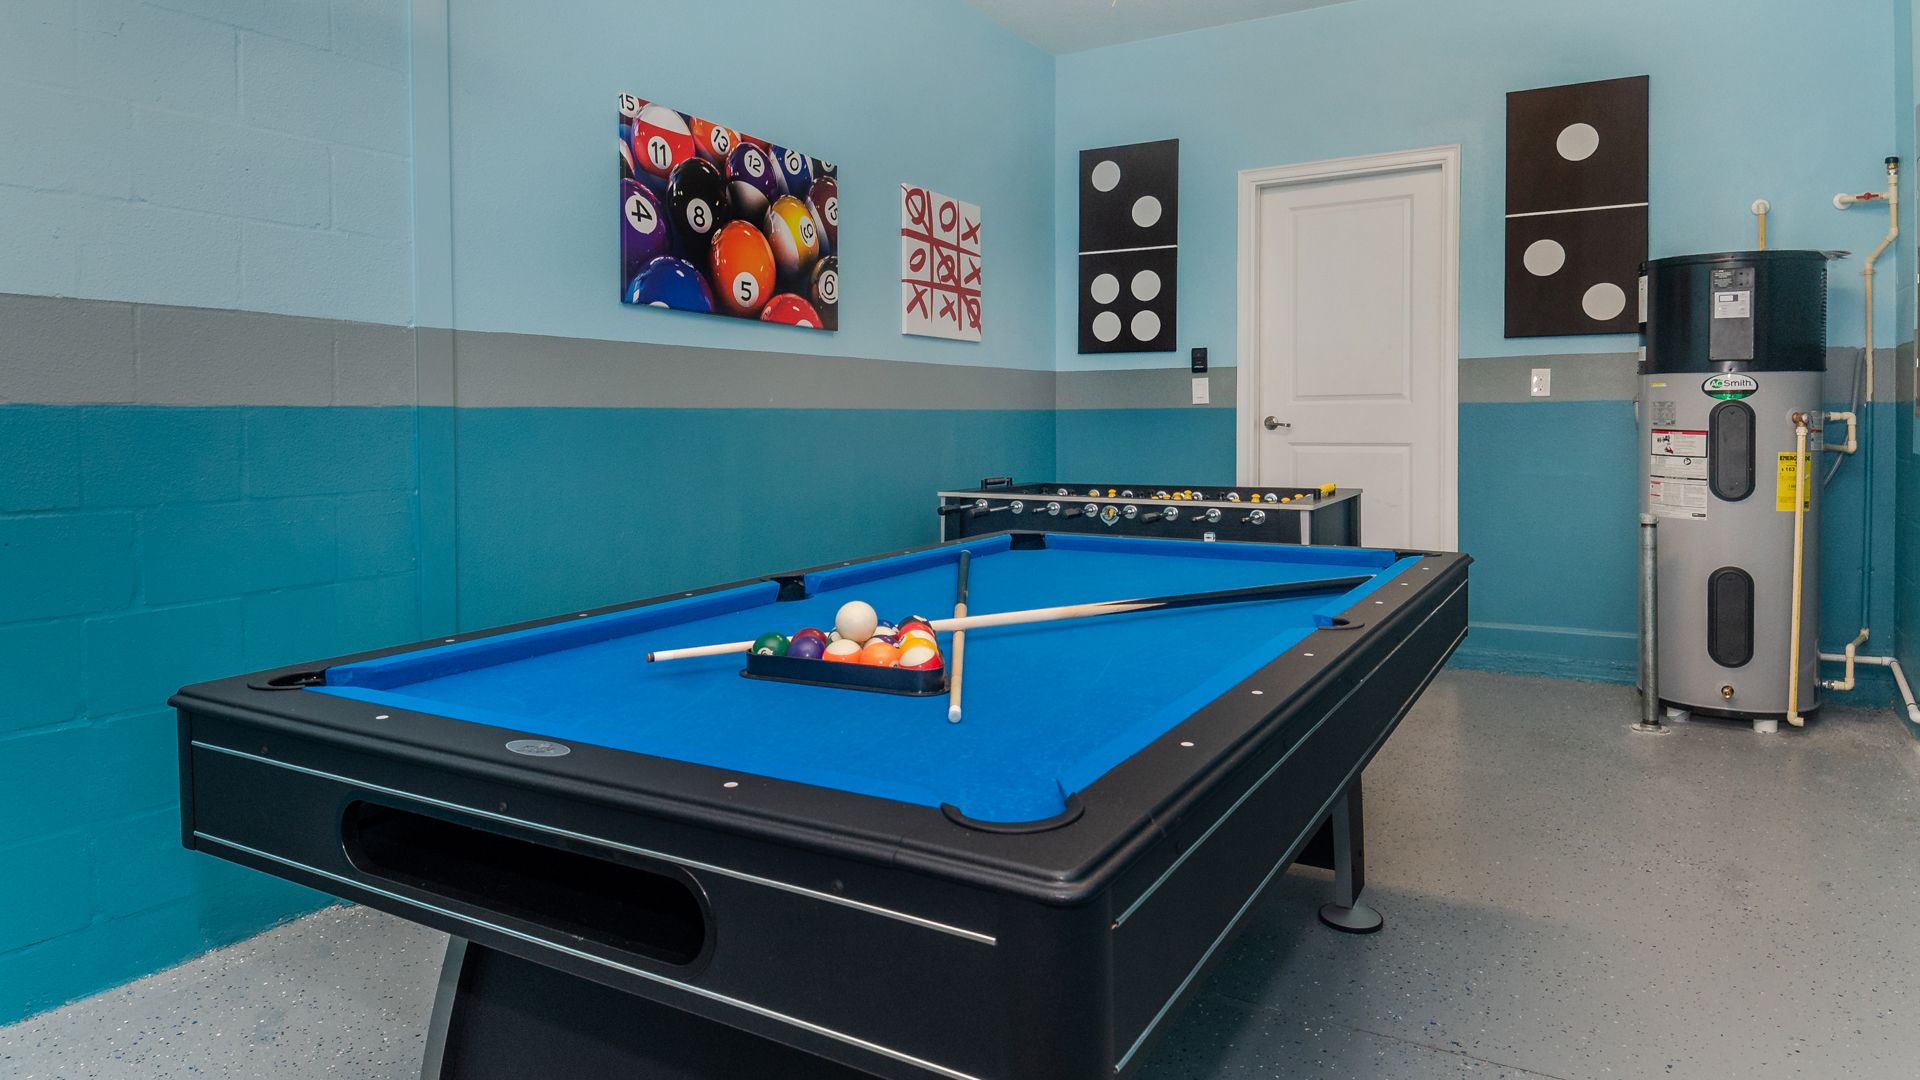 9 Storey Lake Resort 5 Bed Pool Home Games Room